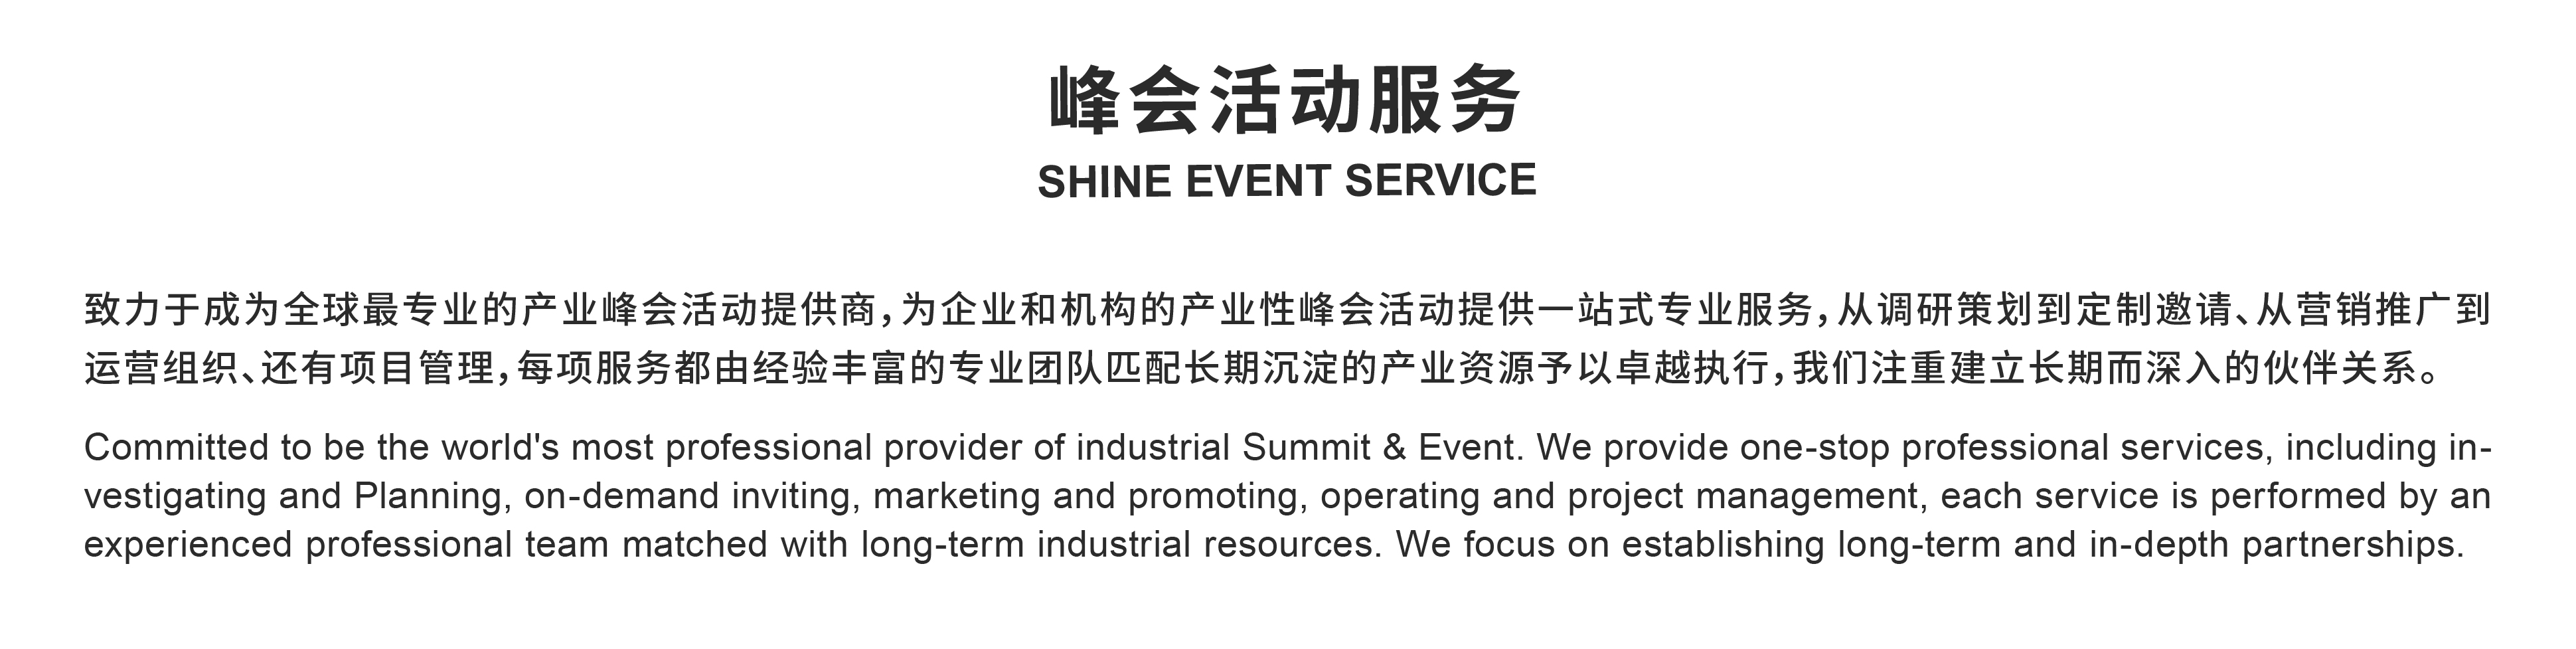 Shine Event Service